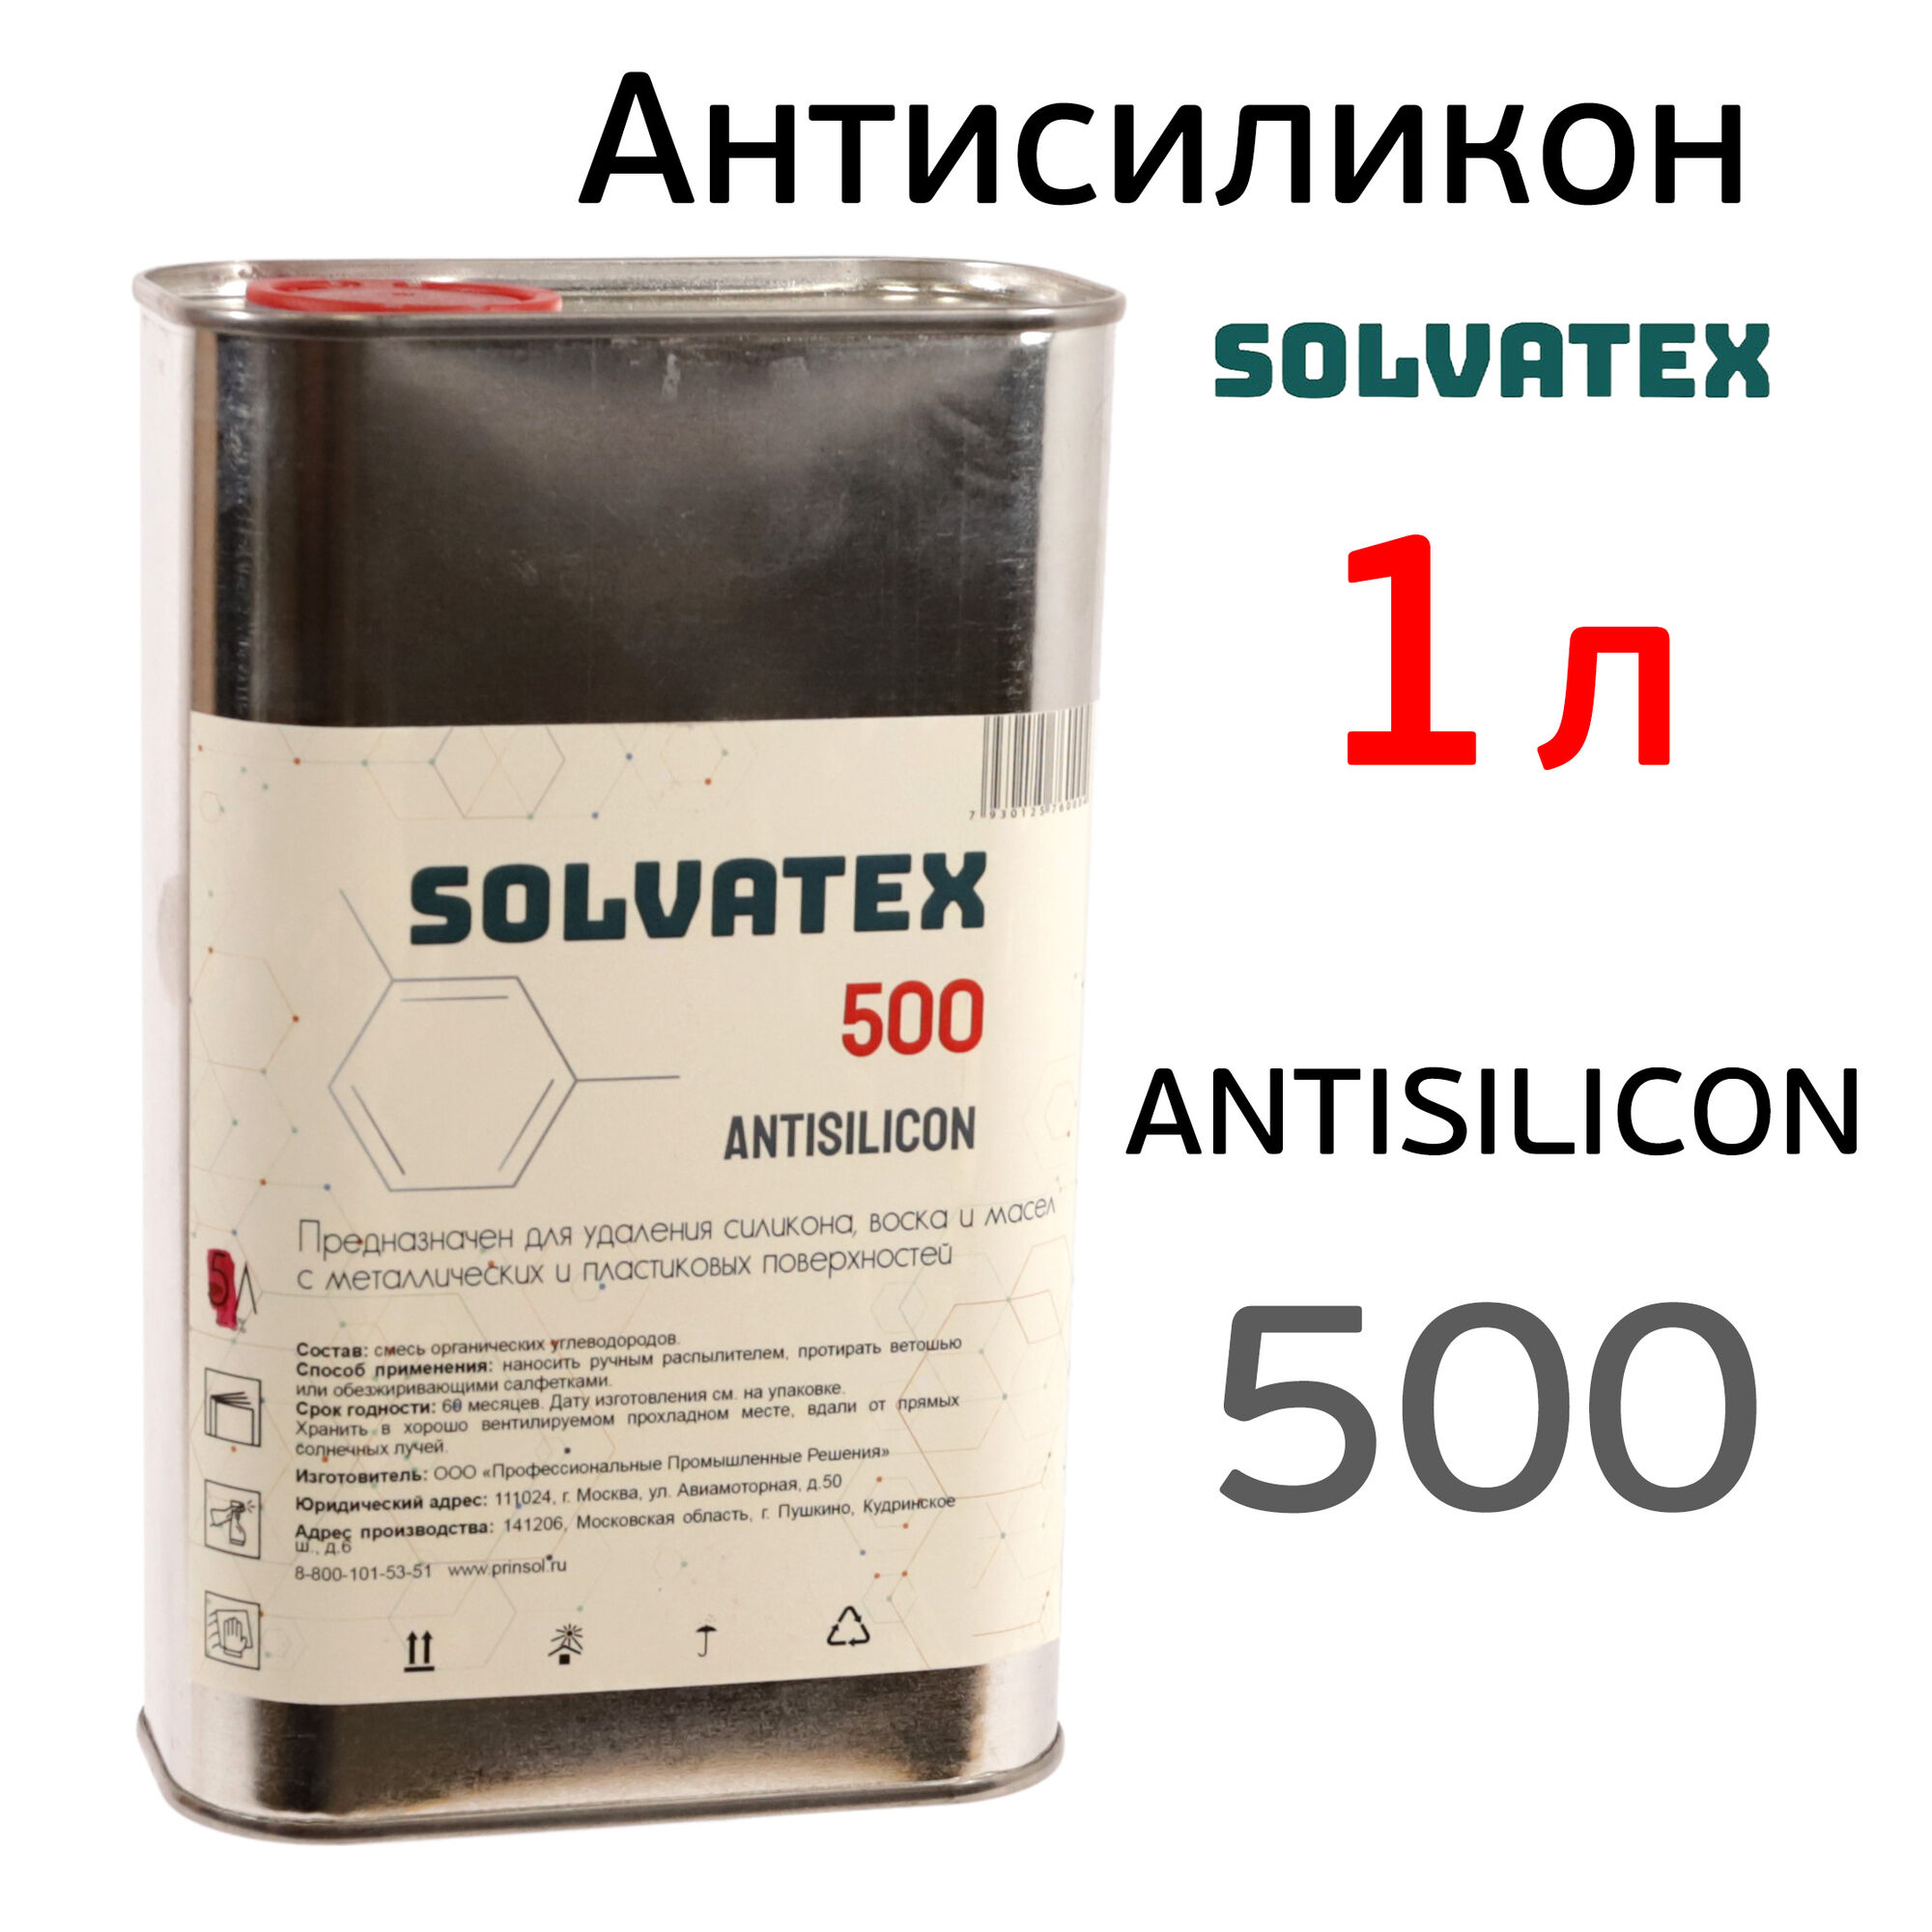 Антисиликон Solvatex 500 (1л) очиститель ЛКП от масла, воска, жира, силикона